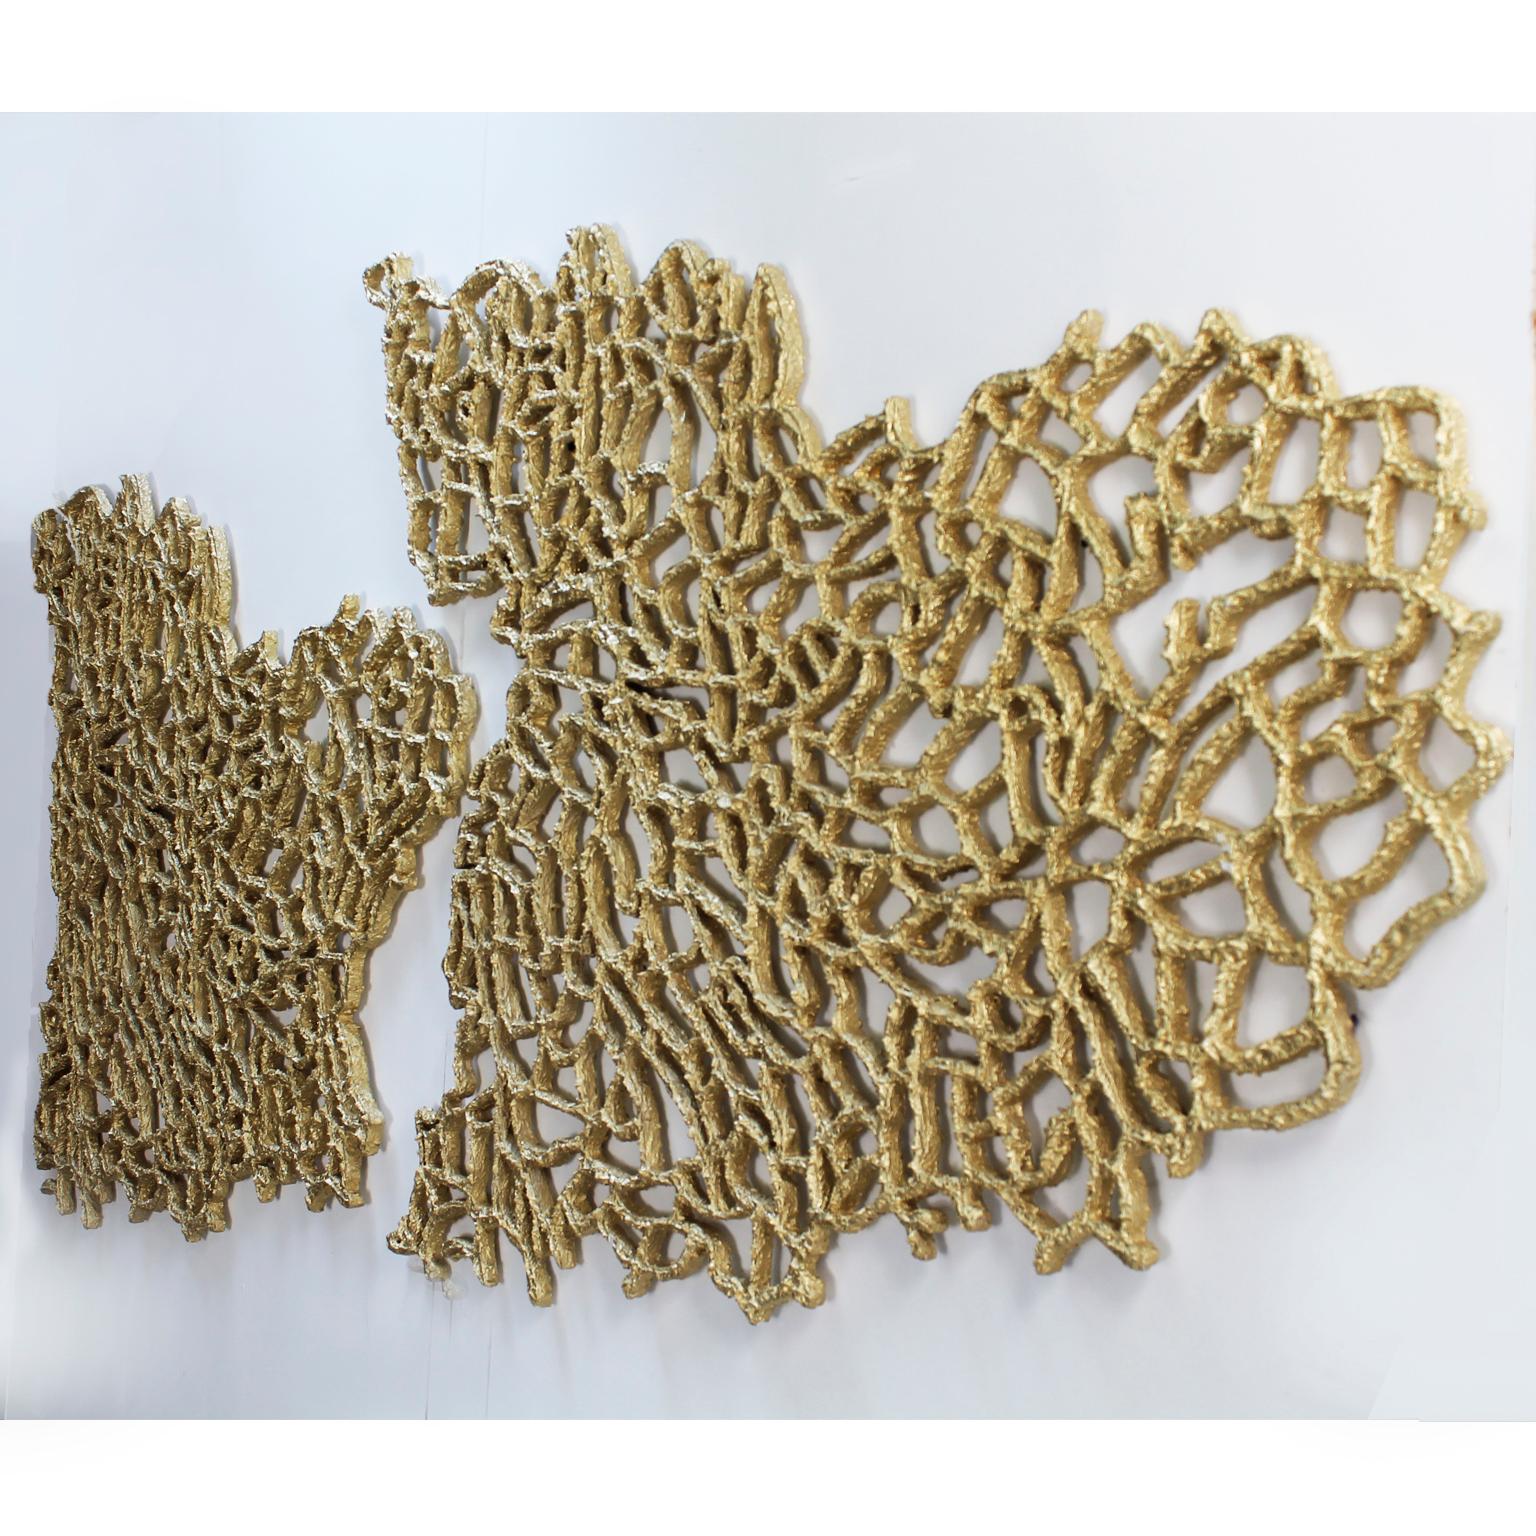 Arozarena De La Fuente Abstract Sculpture - Golden Coral Ocean. Elegant Sculpture for Installing on Walls